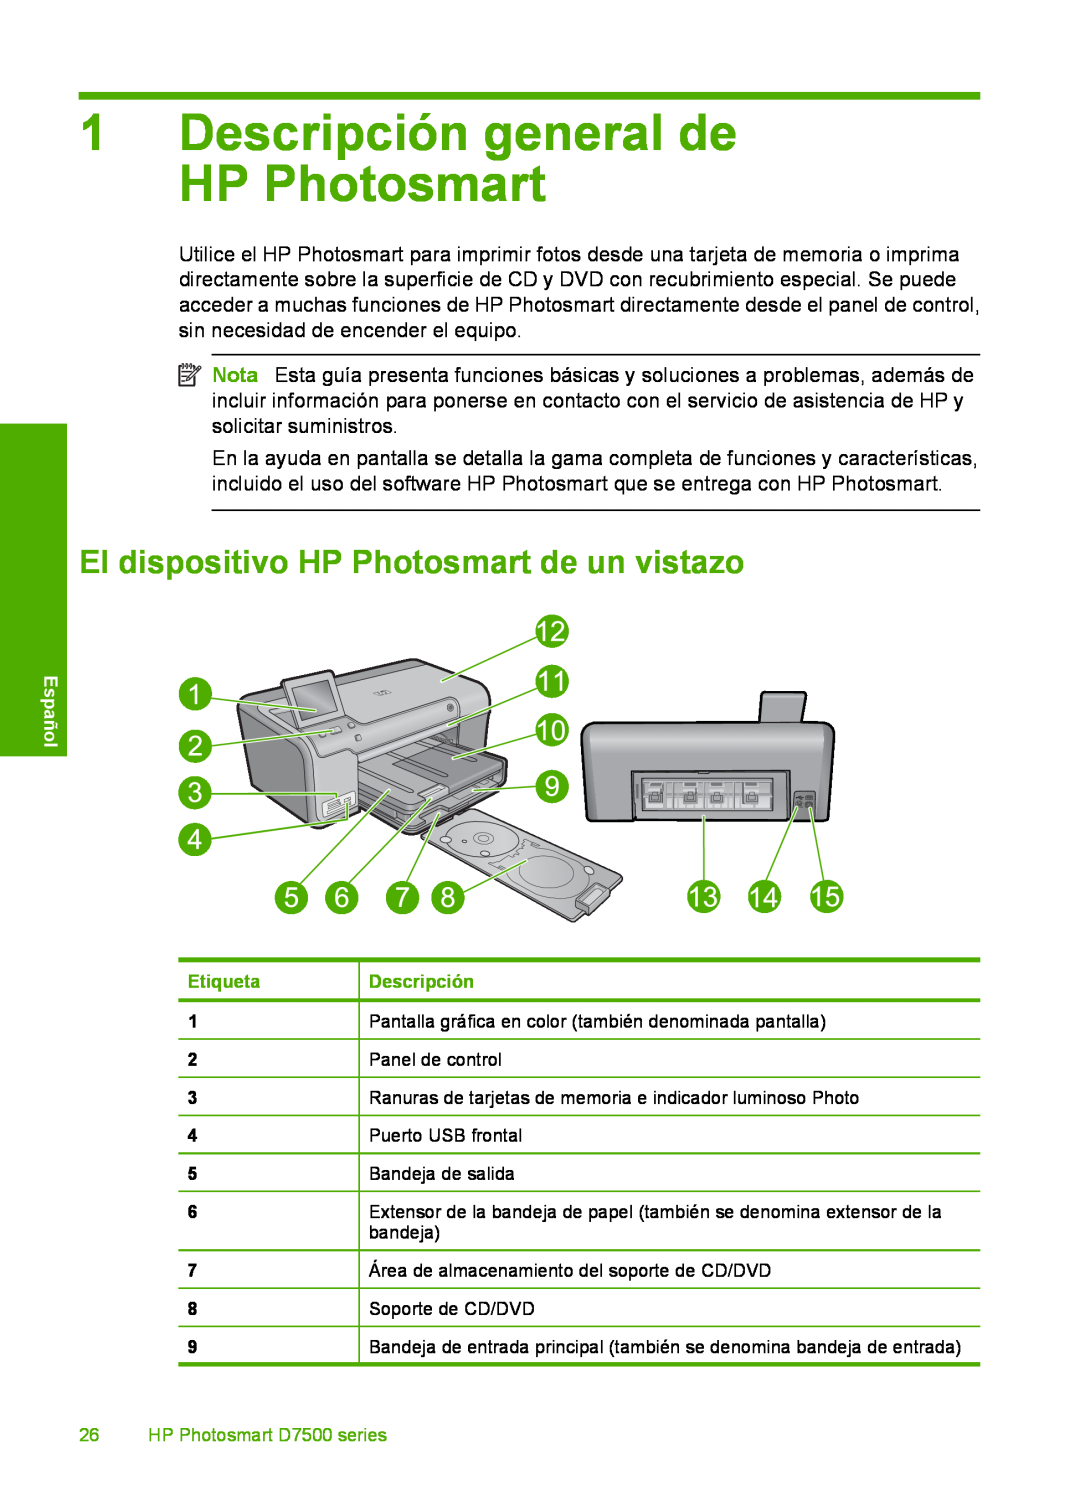 HP D7560 manual Descripción general de HP Photosmart, El dispositivo HP Photosmart de un vistazo 